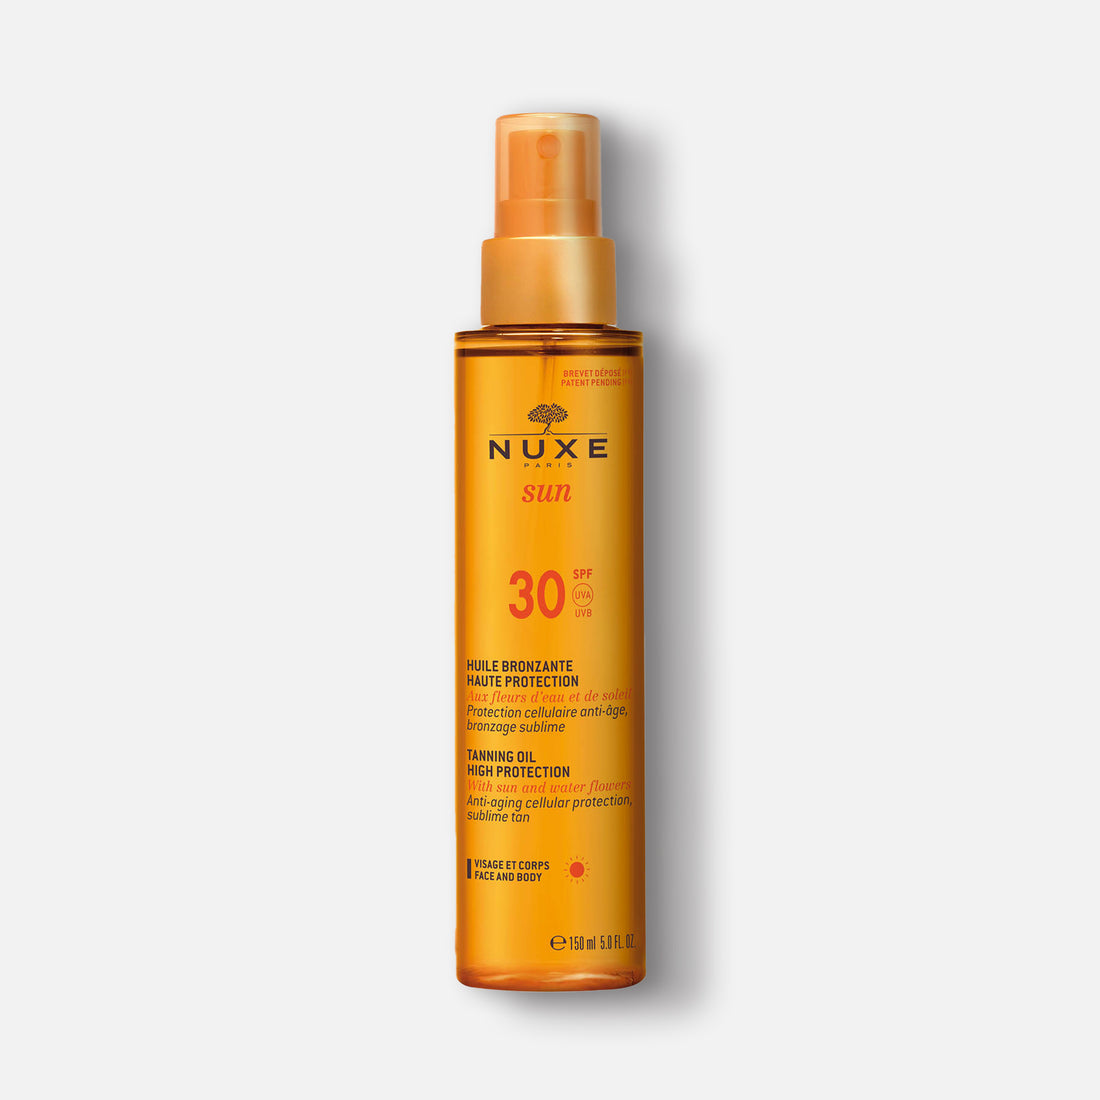 Nuxe - Nuxe Sun - Aceite rostro y cuerpo SPF 30 150 ml - ebeauty